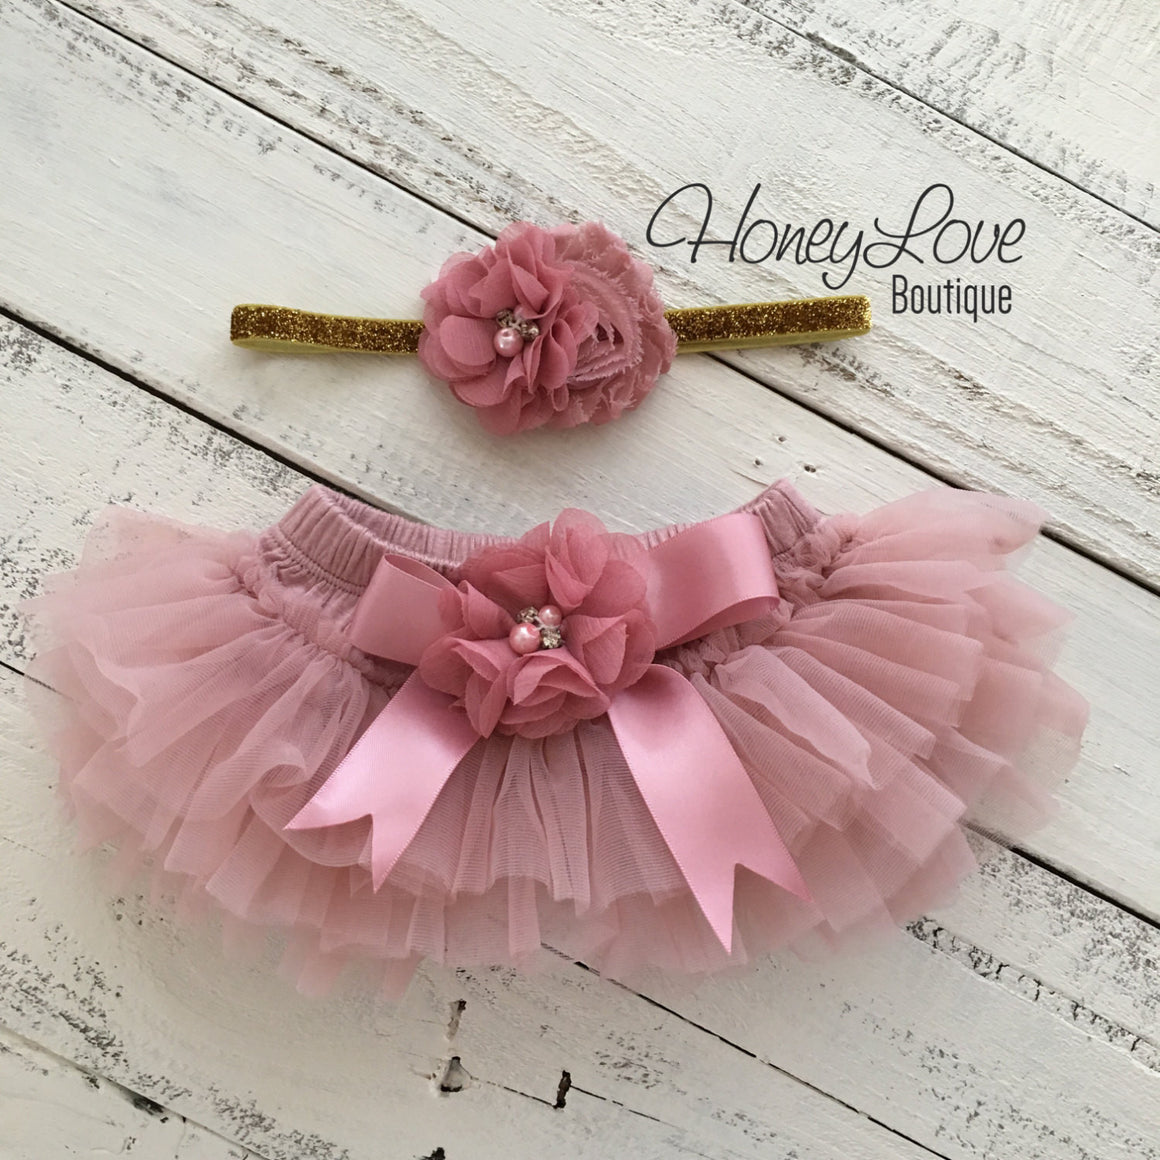 Vintage Pink tutu skirt bloomers and gold glitter headband - embellished bloomers - HoneyLoveBoutique